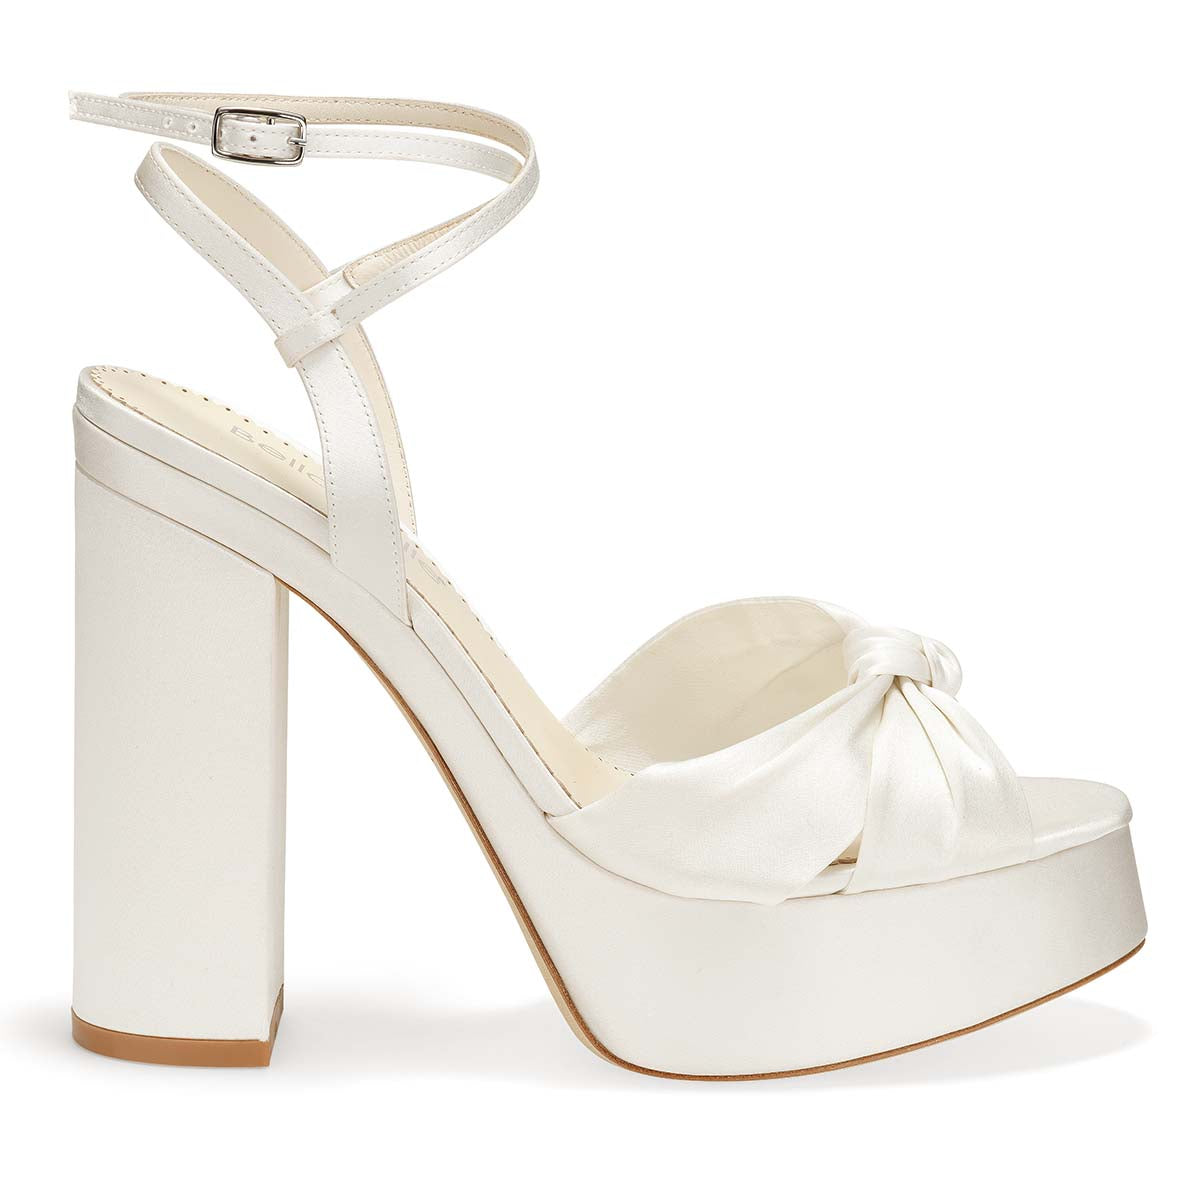 Barbie heels platform heels sandals ivory wedding